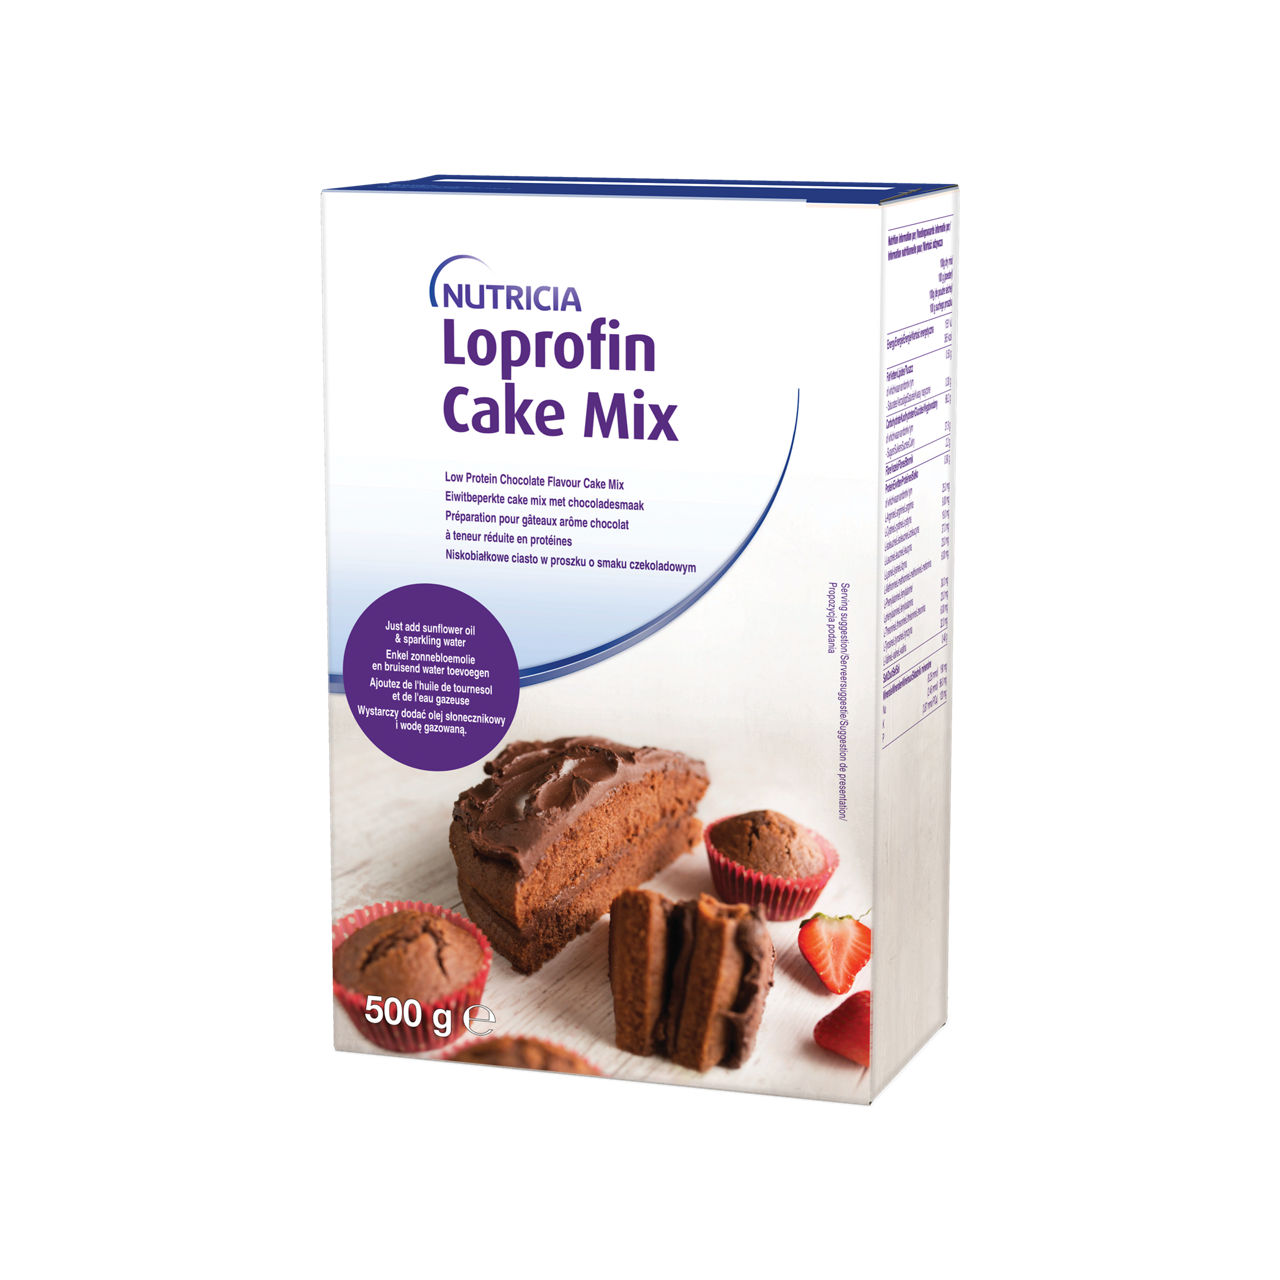 en-GB,Loprofin Chocolate Cake Mix